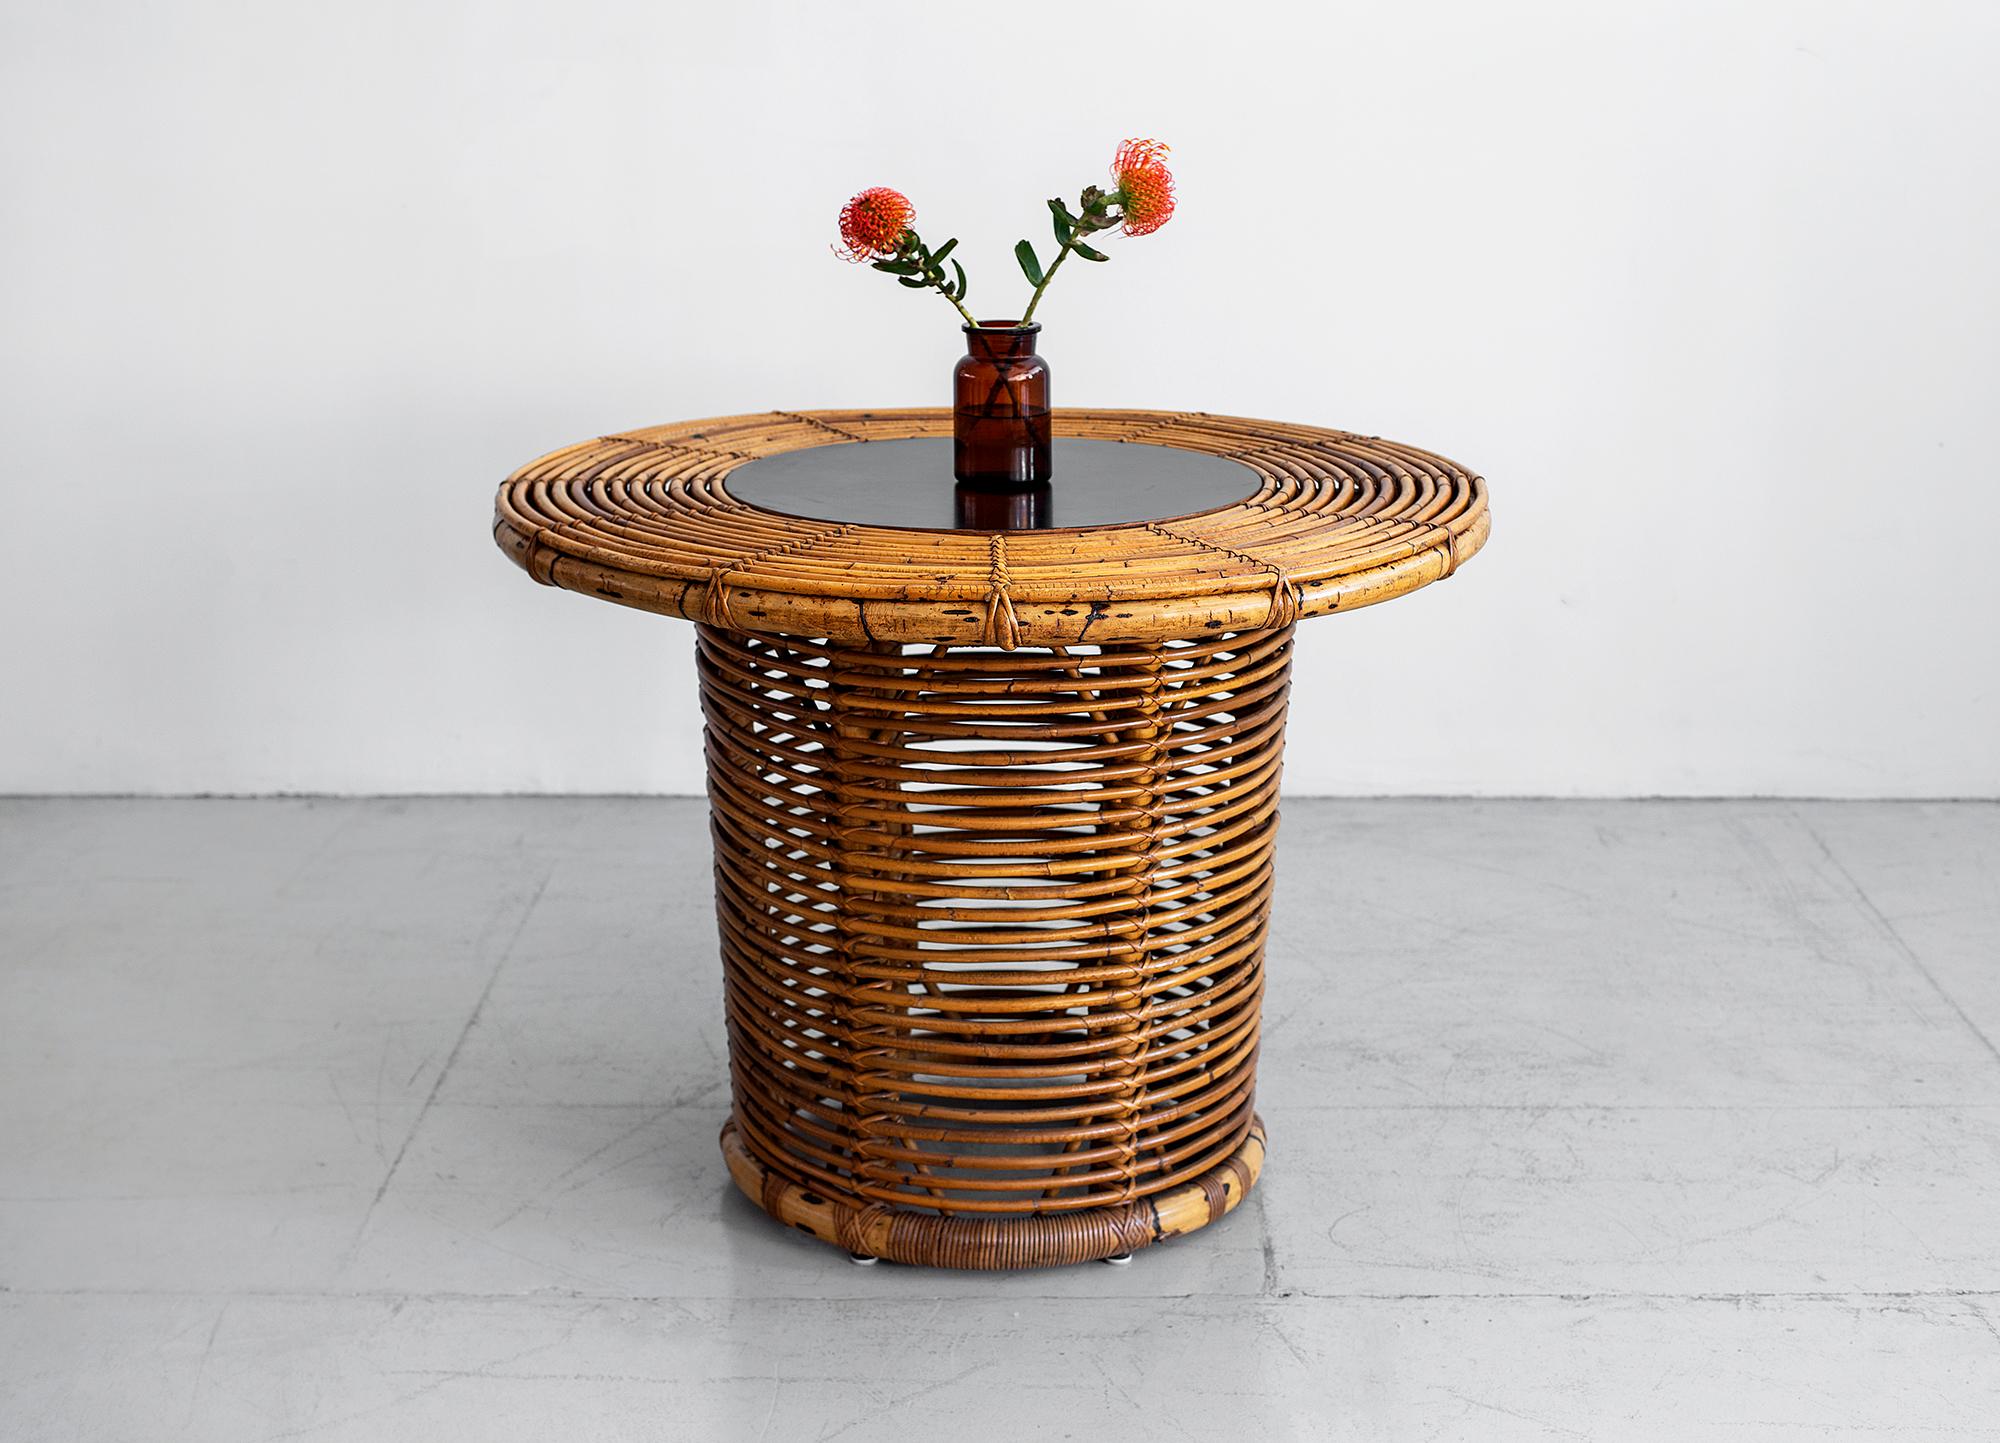 Circular Italian rattan table by Bonacina
Laminated wood centrepiece.